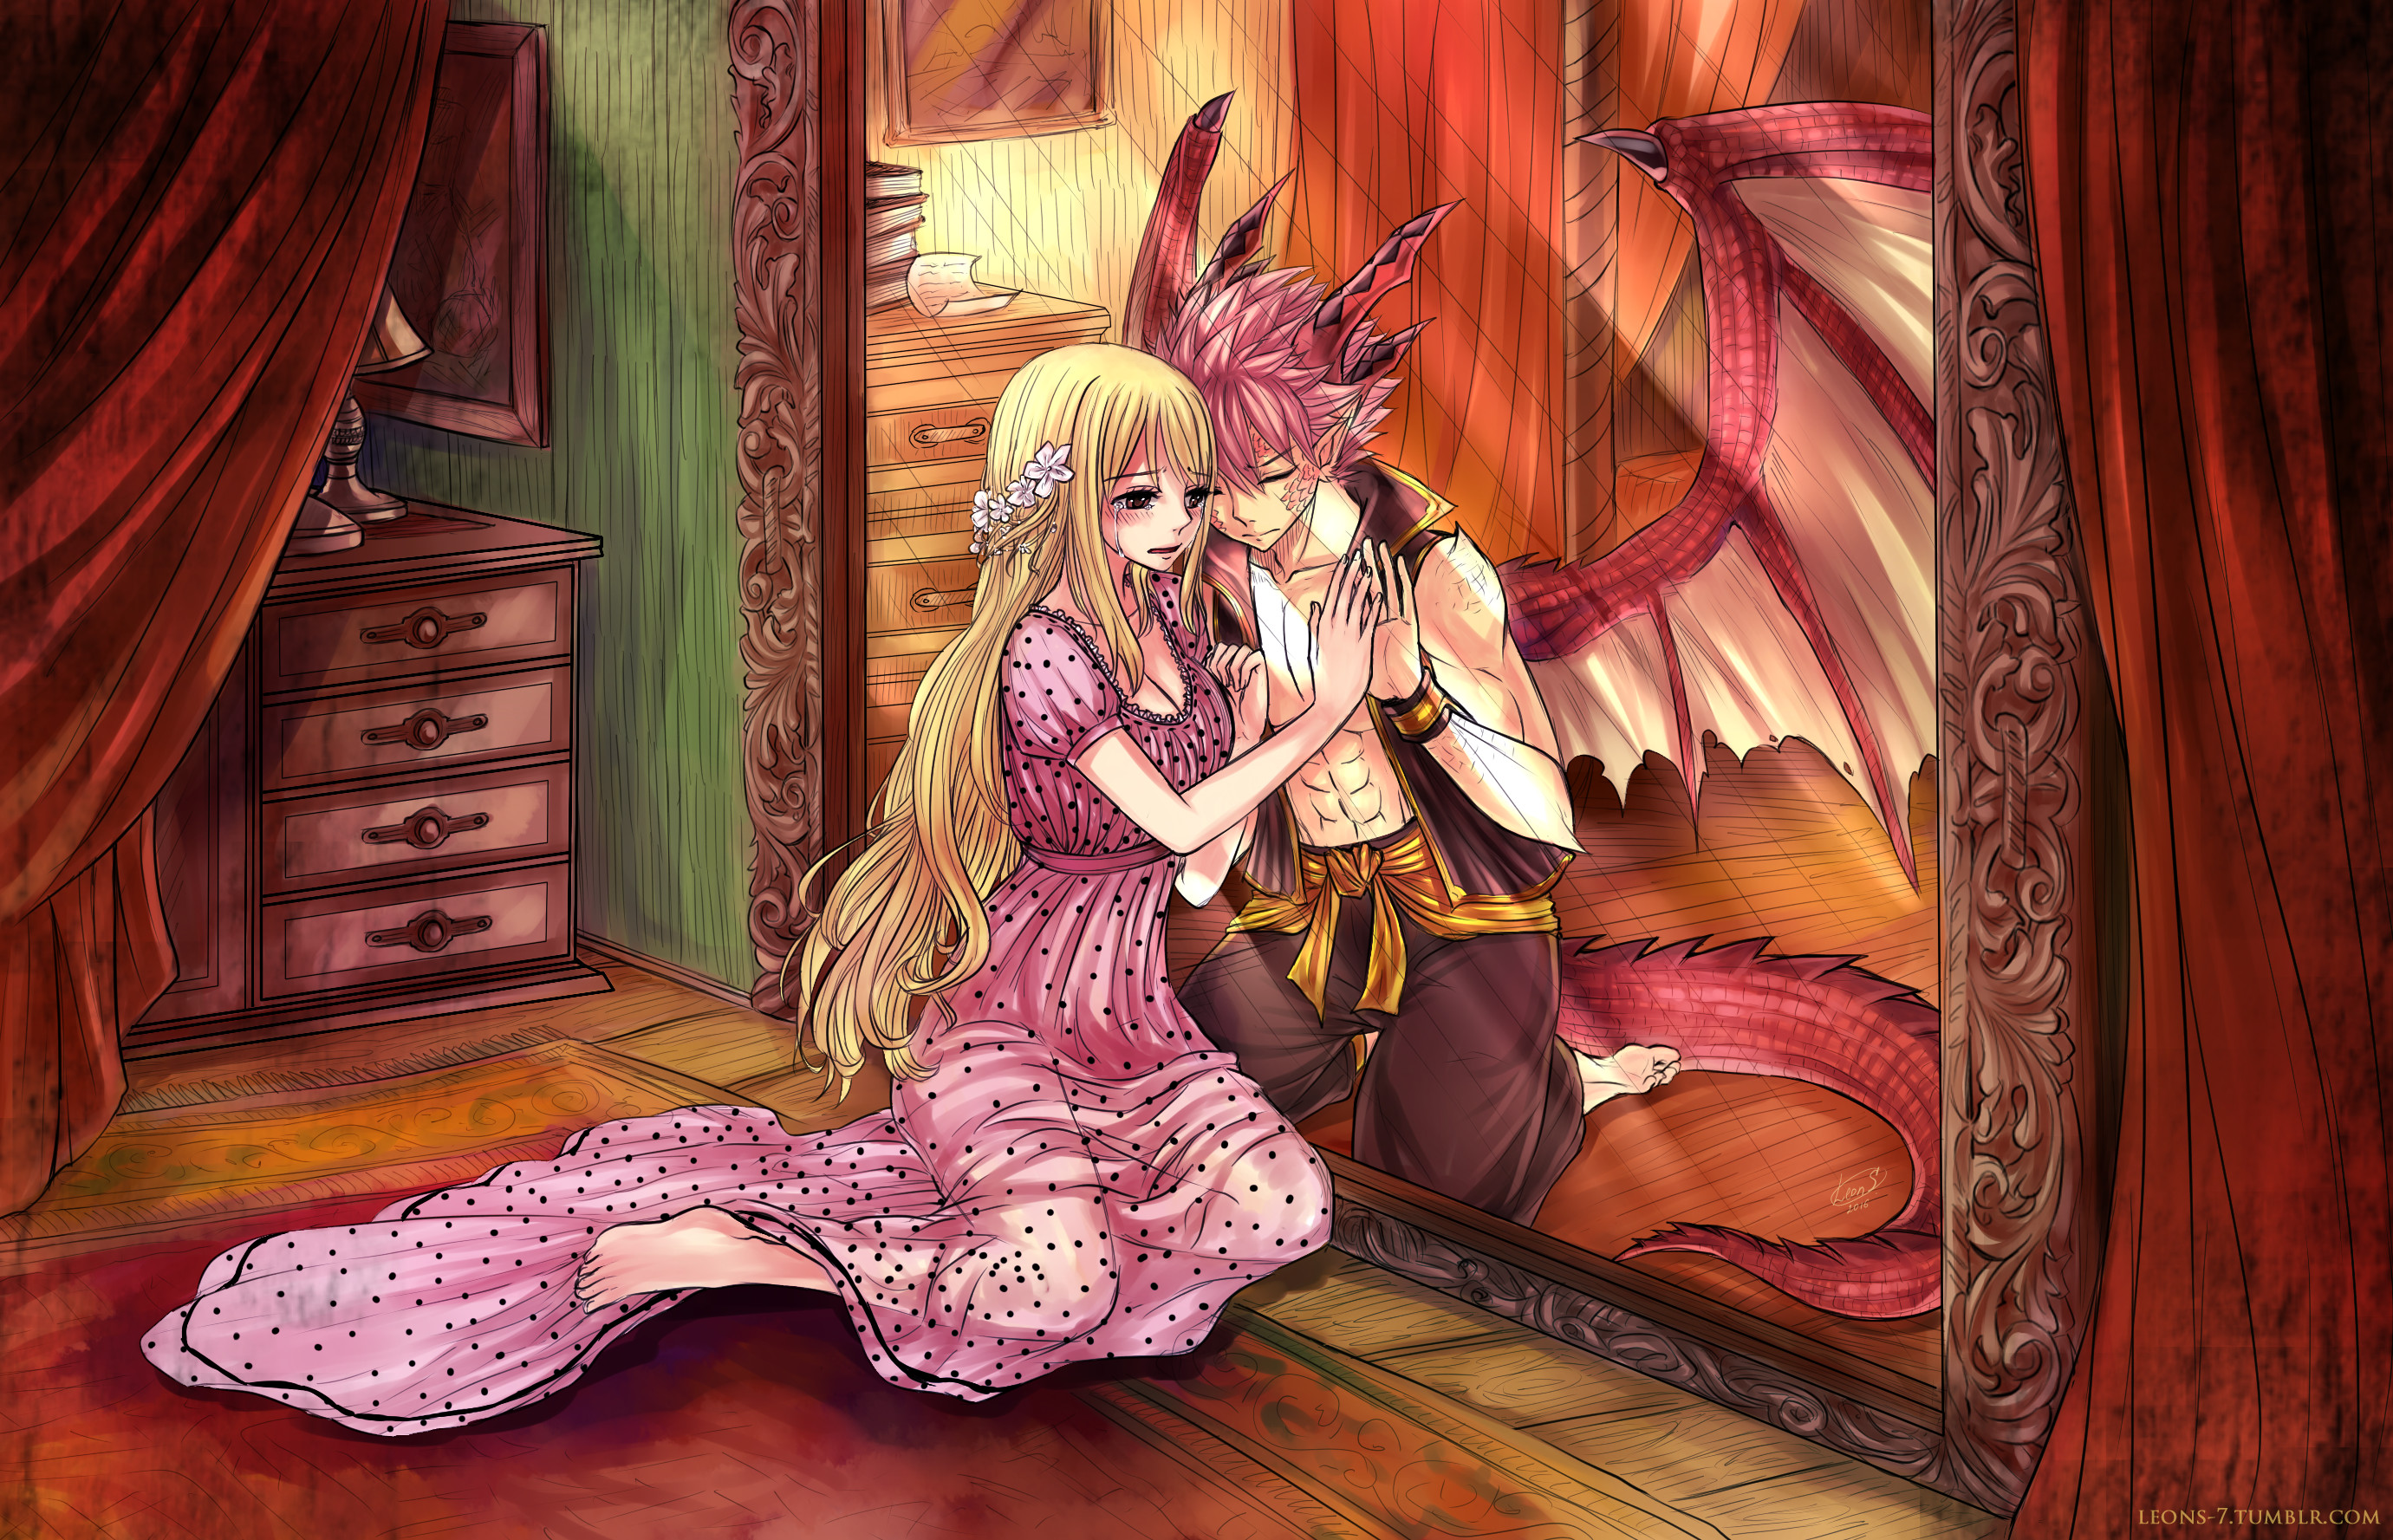 wallpaper de fairy tail,cg artwork,anime,fictional character,illustration,art